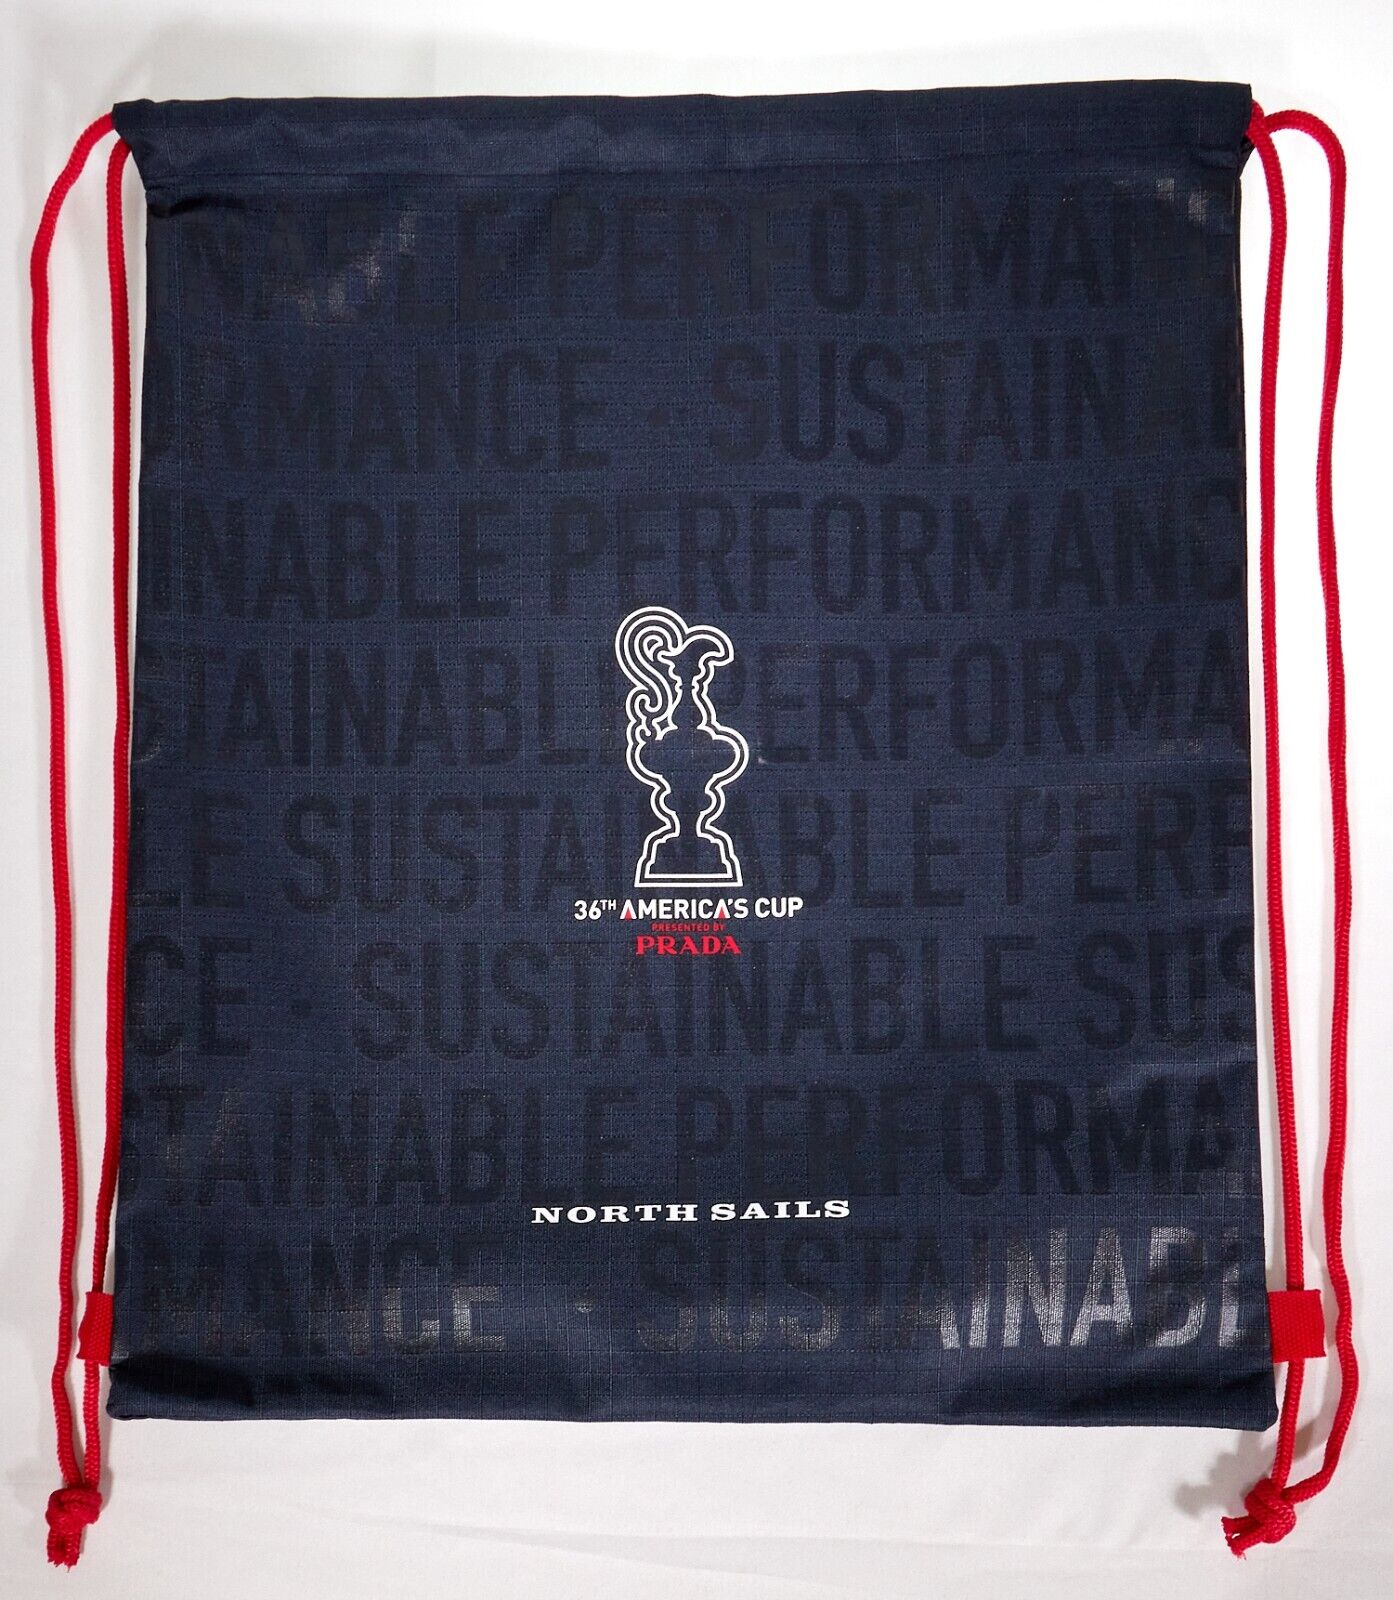 PRADA North Sails 36th America's Cup Drawstring Backpack